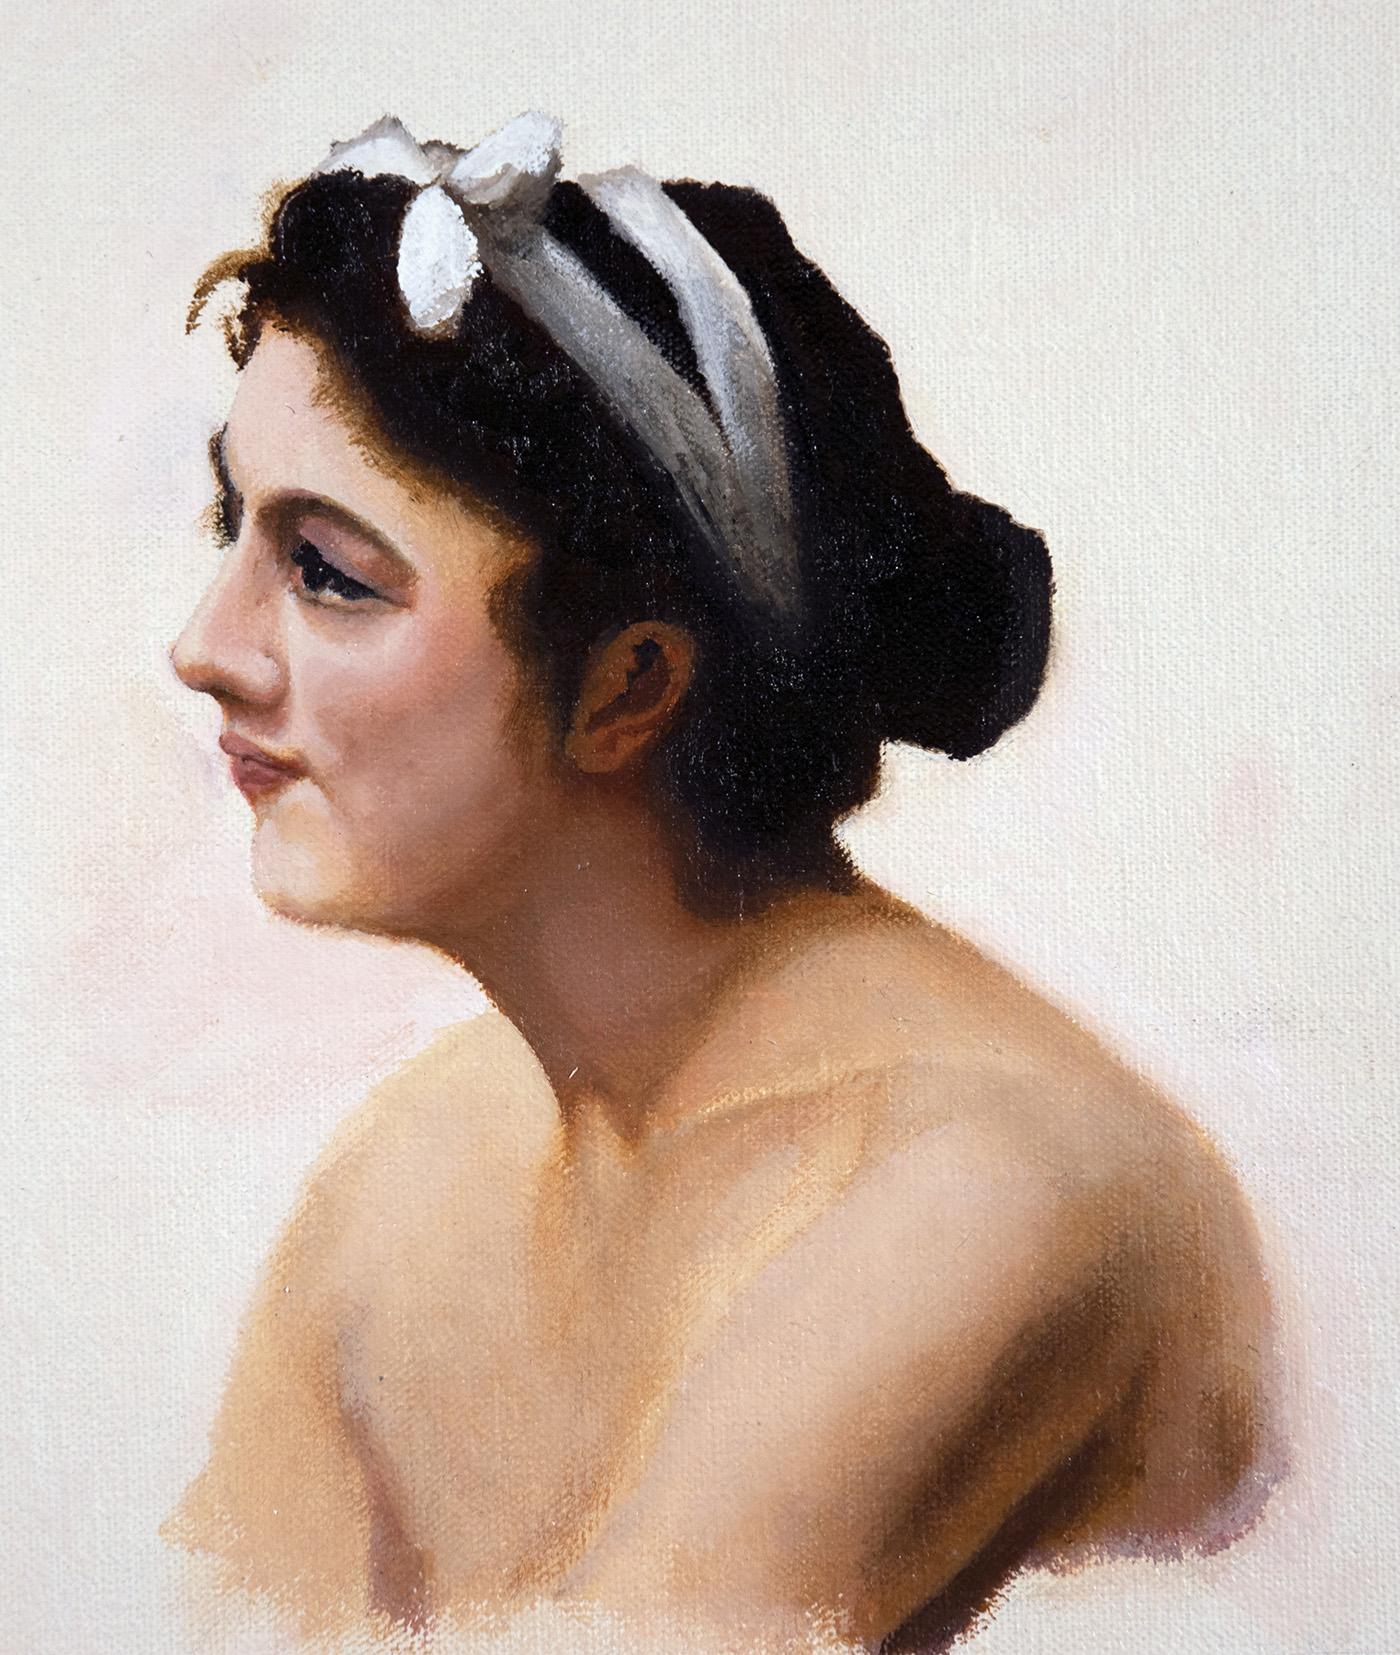 Oil sketch of a female portrait after Bouguereau